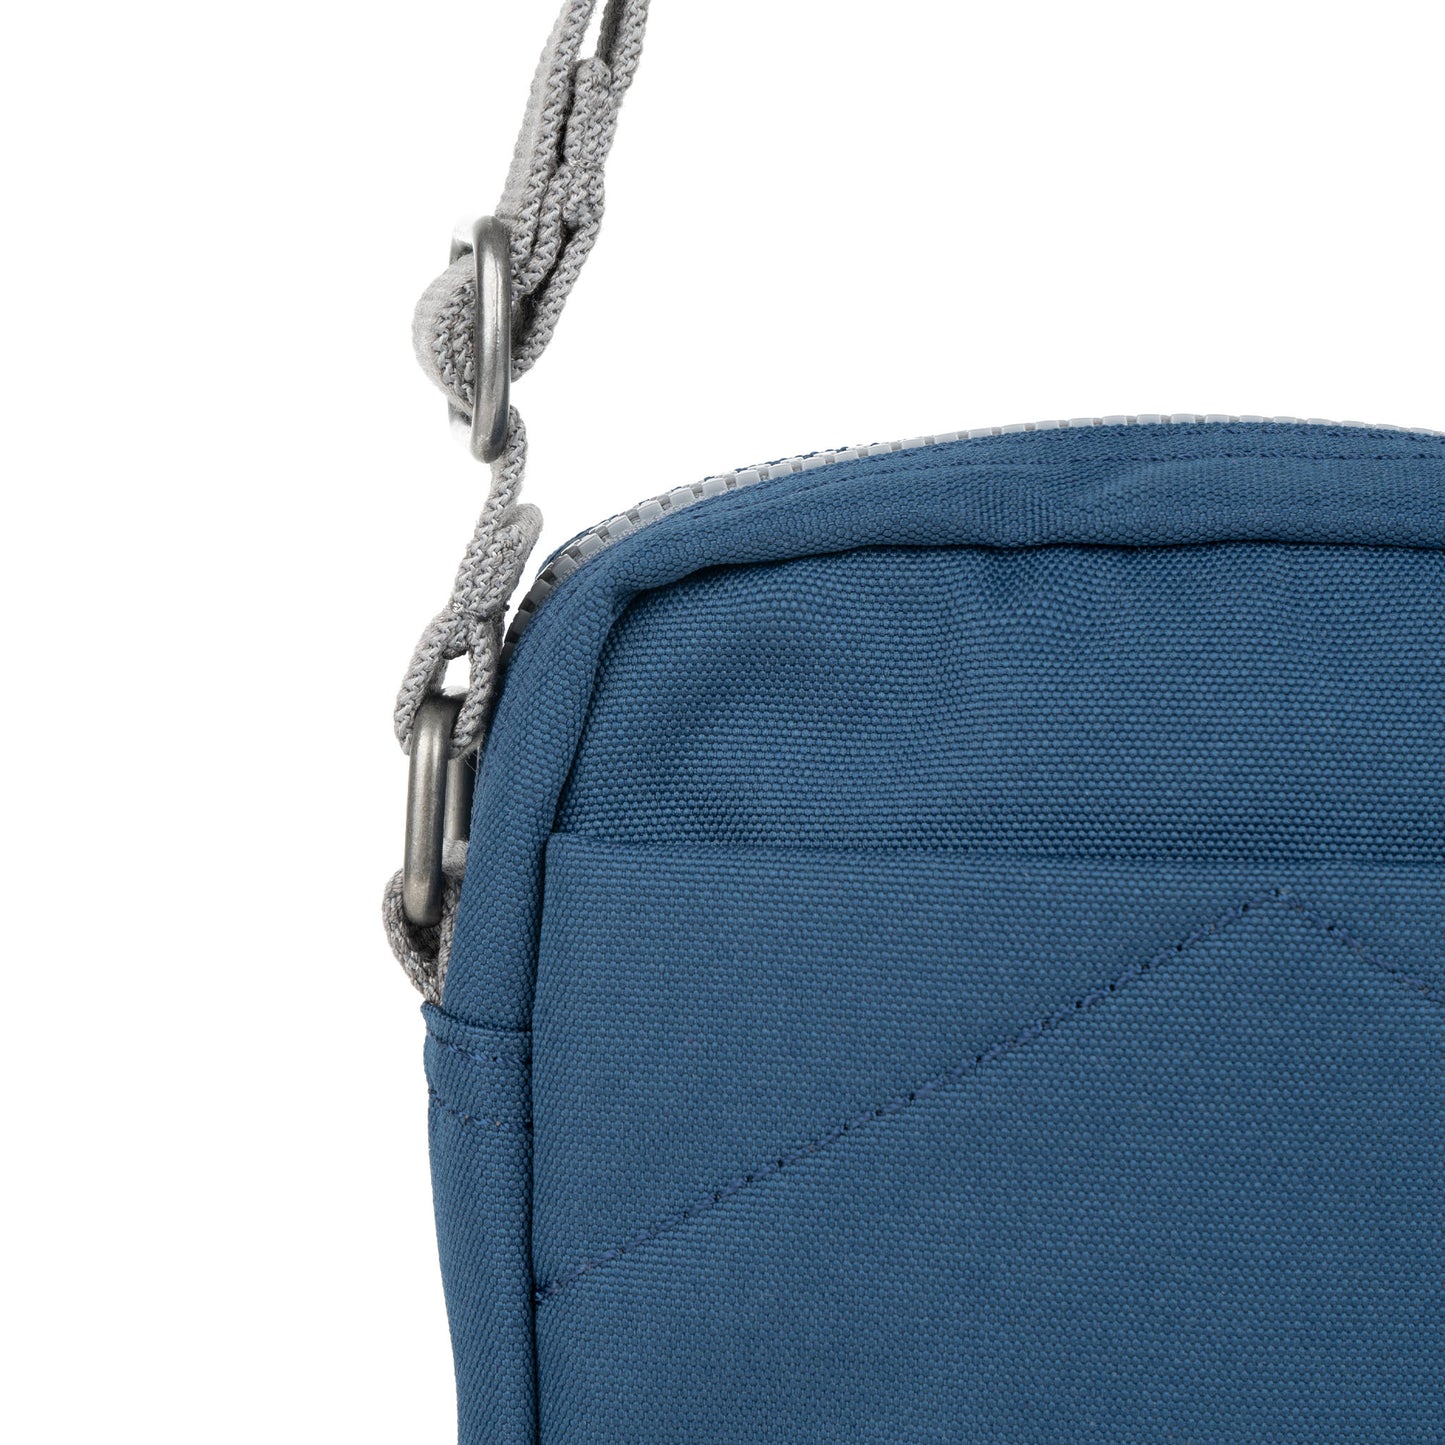 Roka London Bond Crossbody Bag, Deep blue  (Sustainable Canvas)